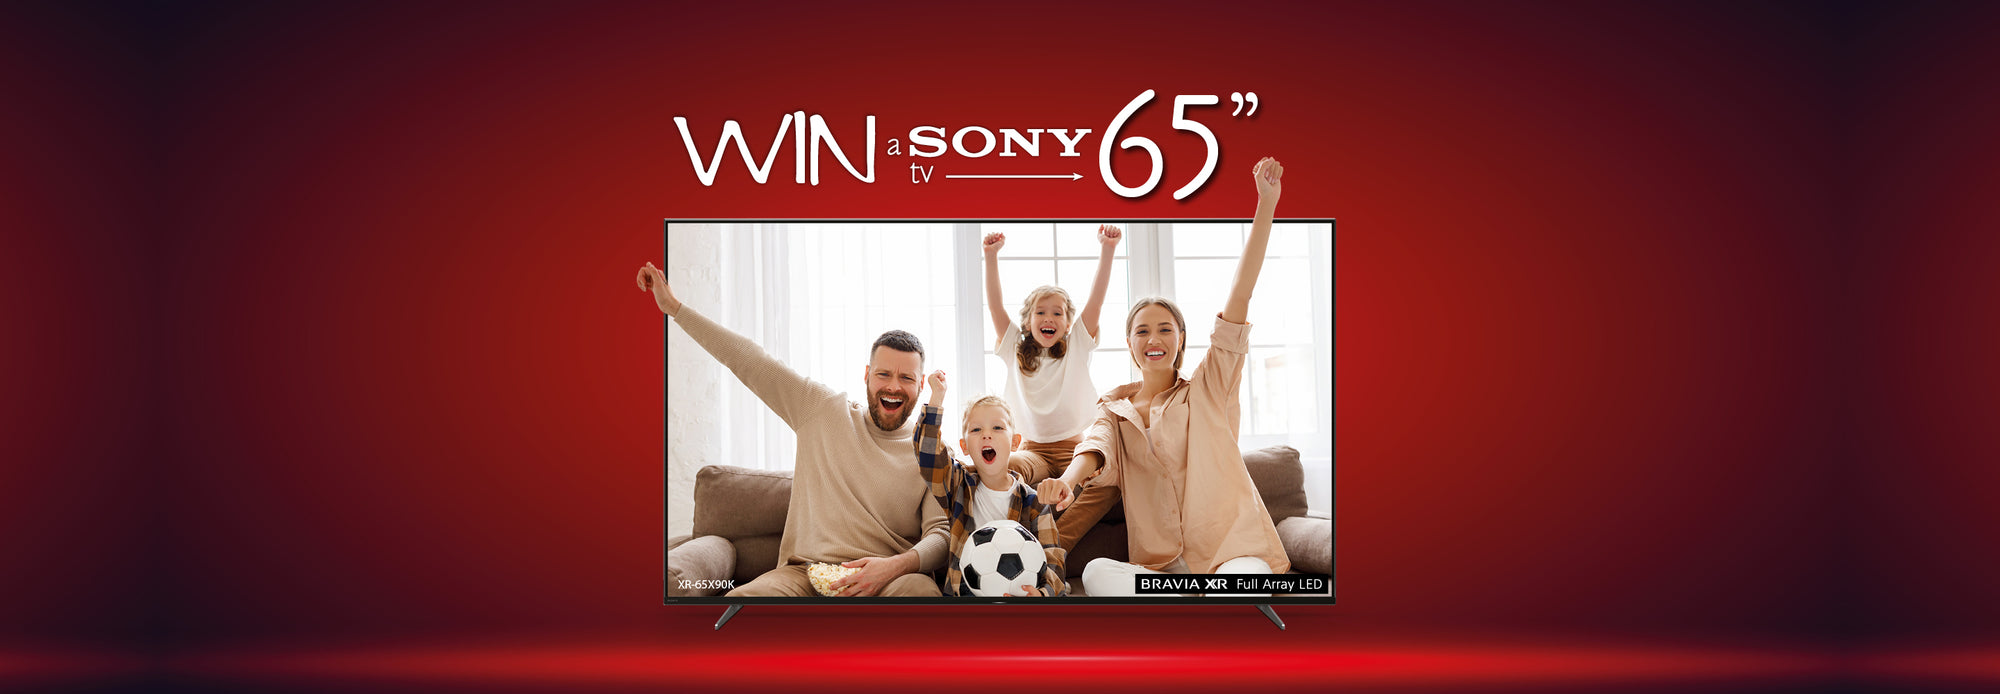 Win a Sony Tv 65 | SOXNPLUS Rockland